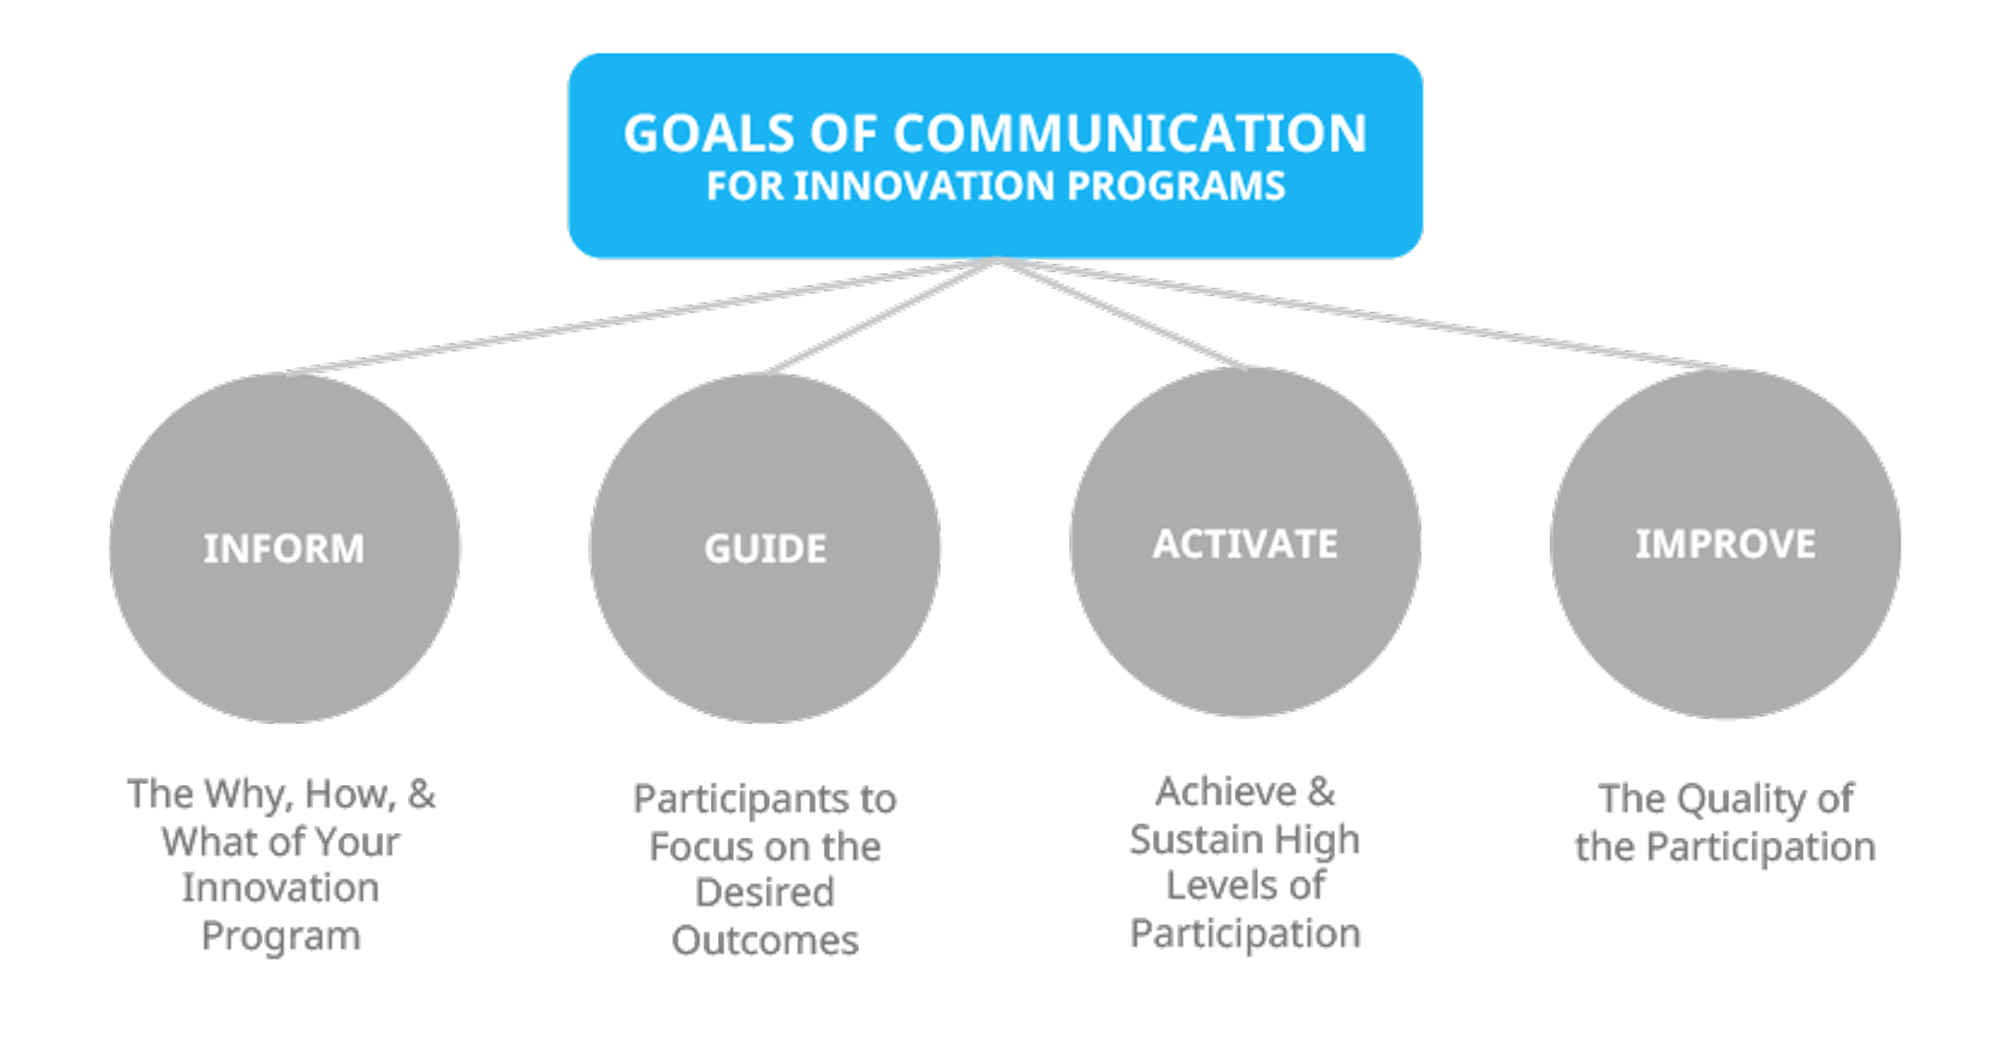 Goals of communication in innovation programs